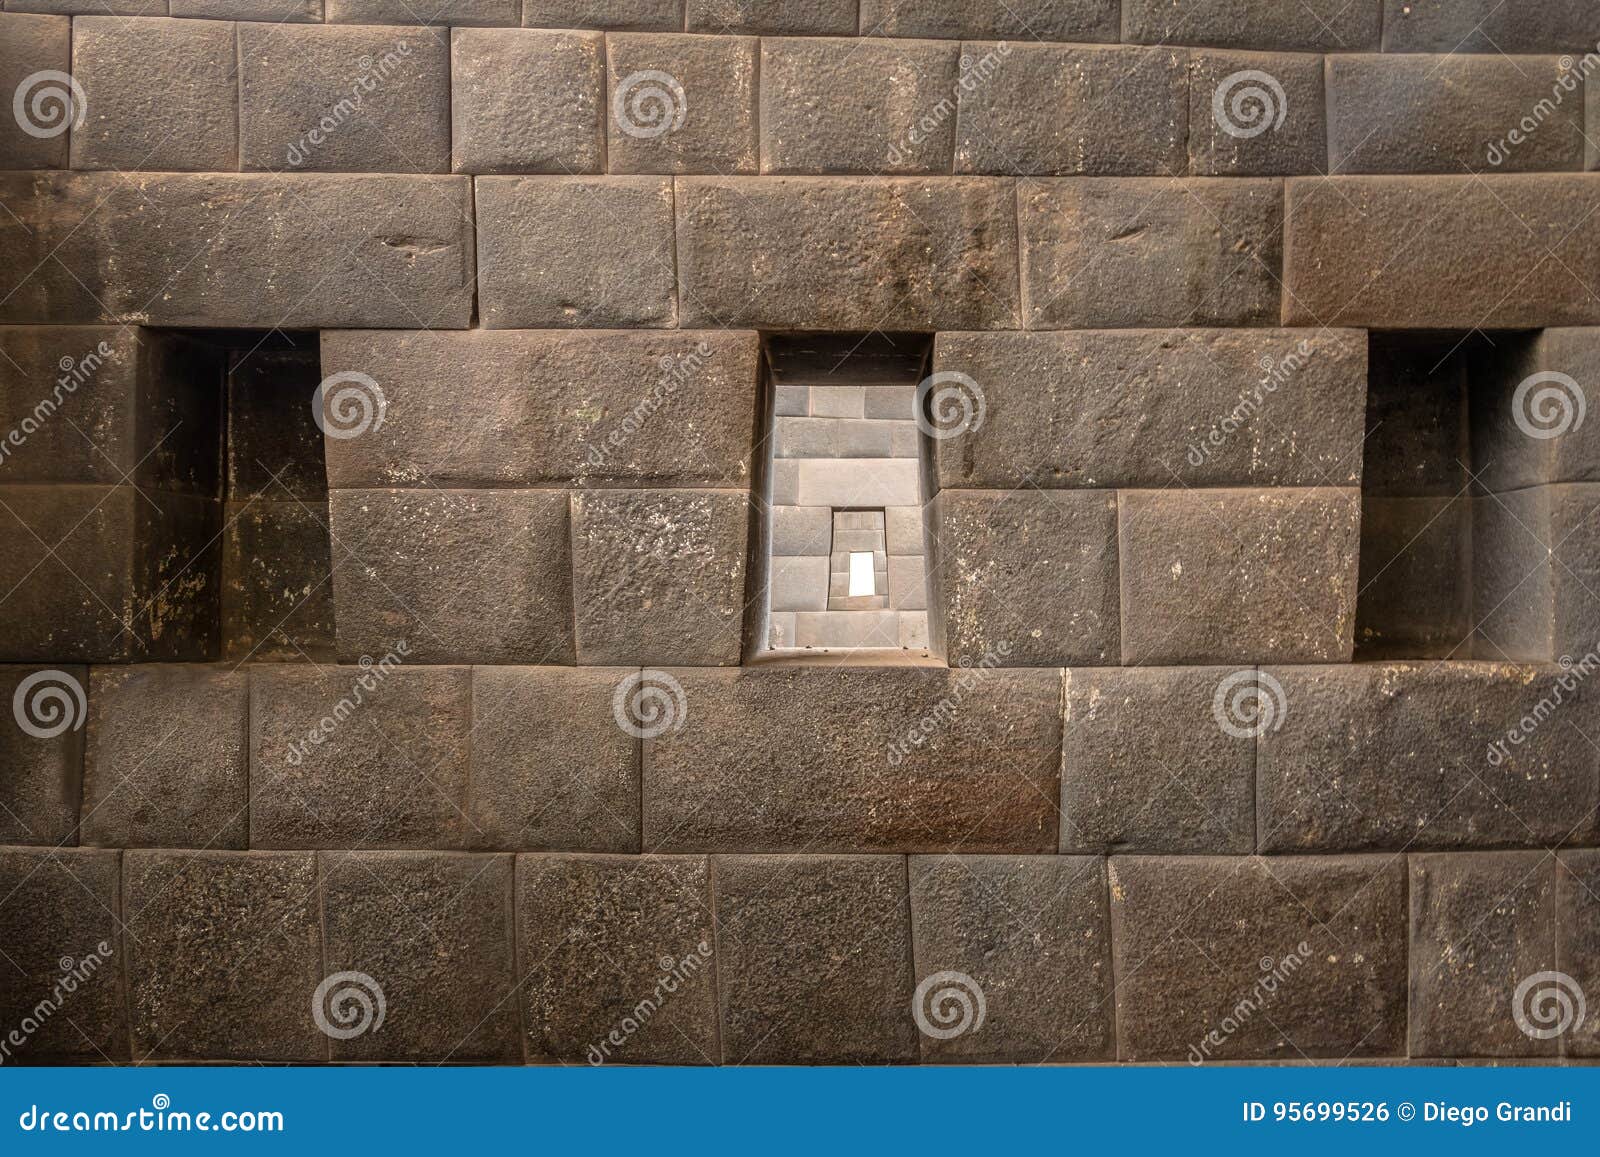 the three trapezoidal windows and inca wall of rainbow temple at qoricancha inca ruins - cusco, peru